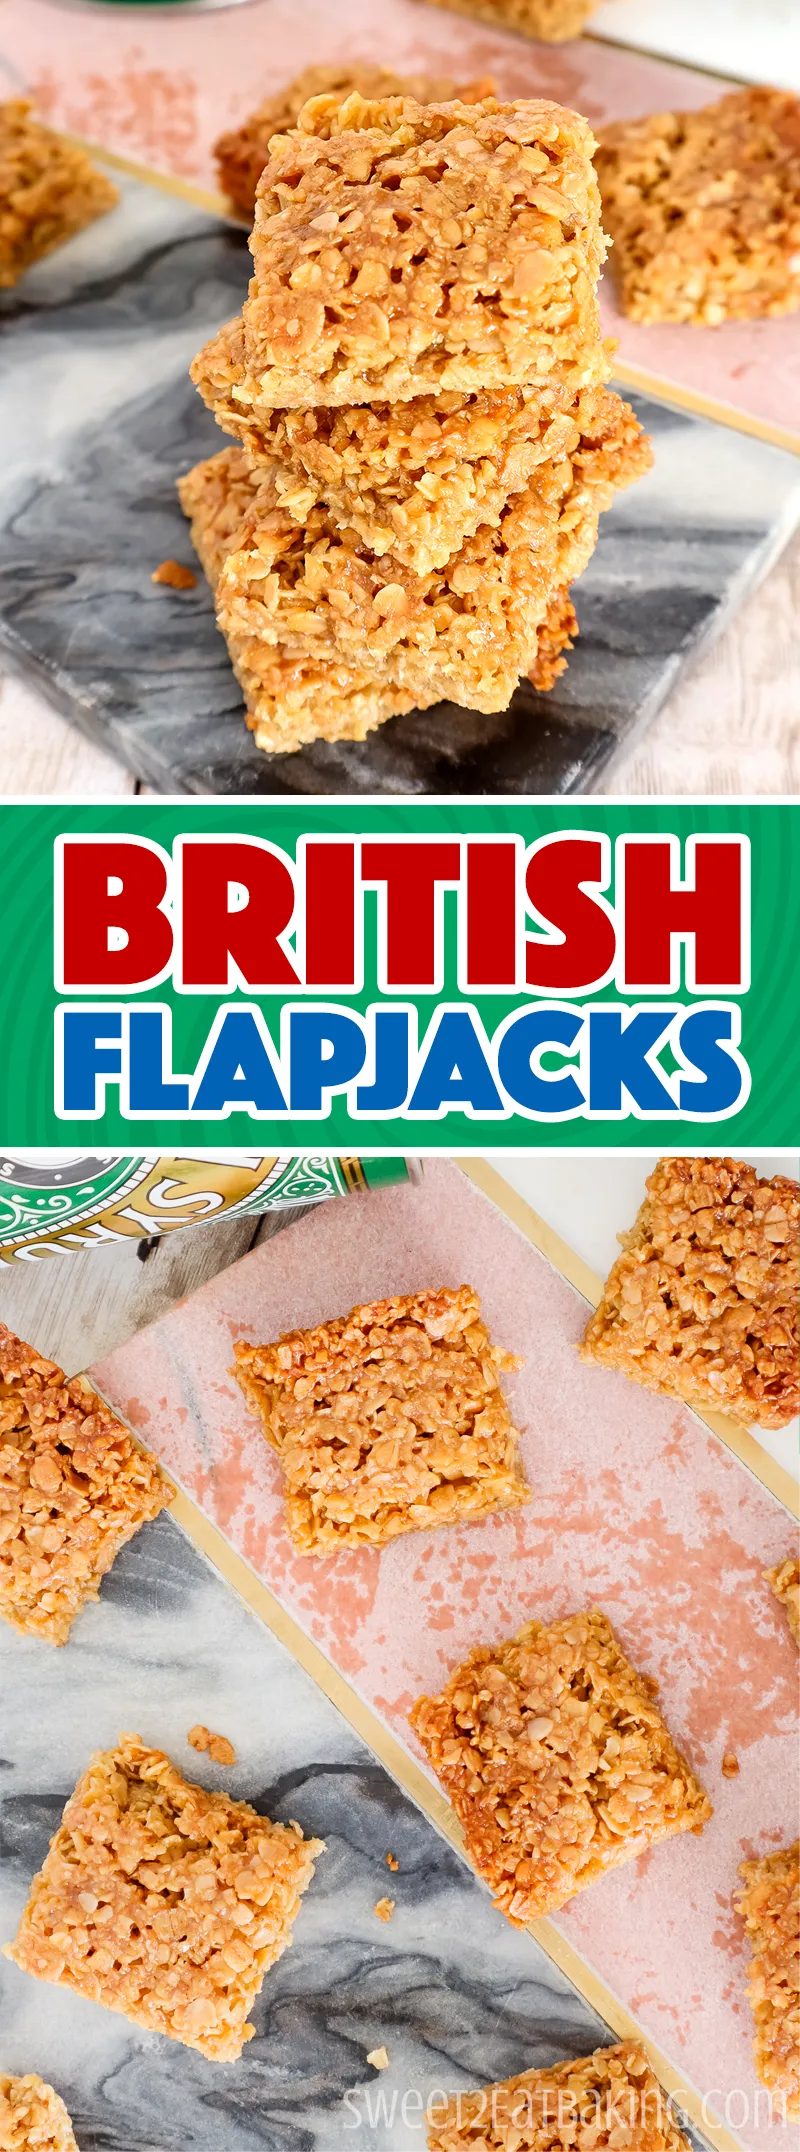 British Flapjacks Recipe by Sweet2EatBaking.com